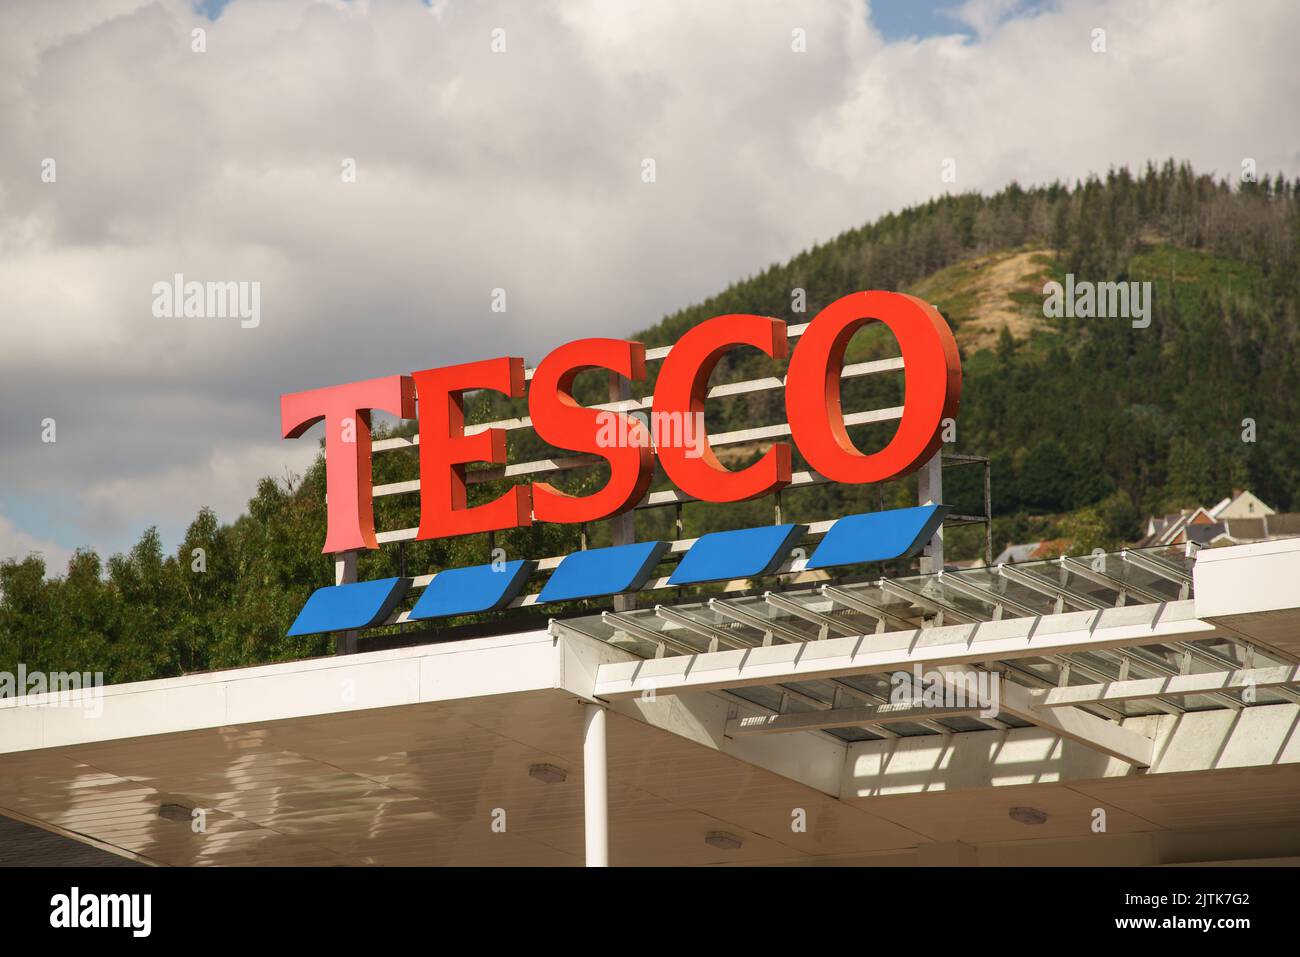 Tesco supermarket sign Stock Photo